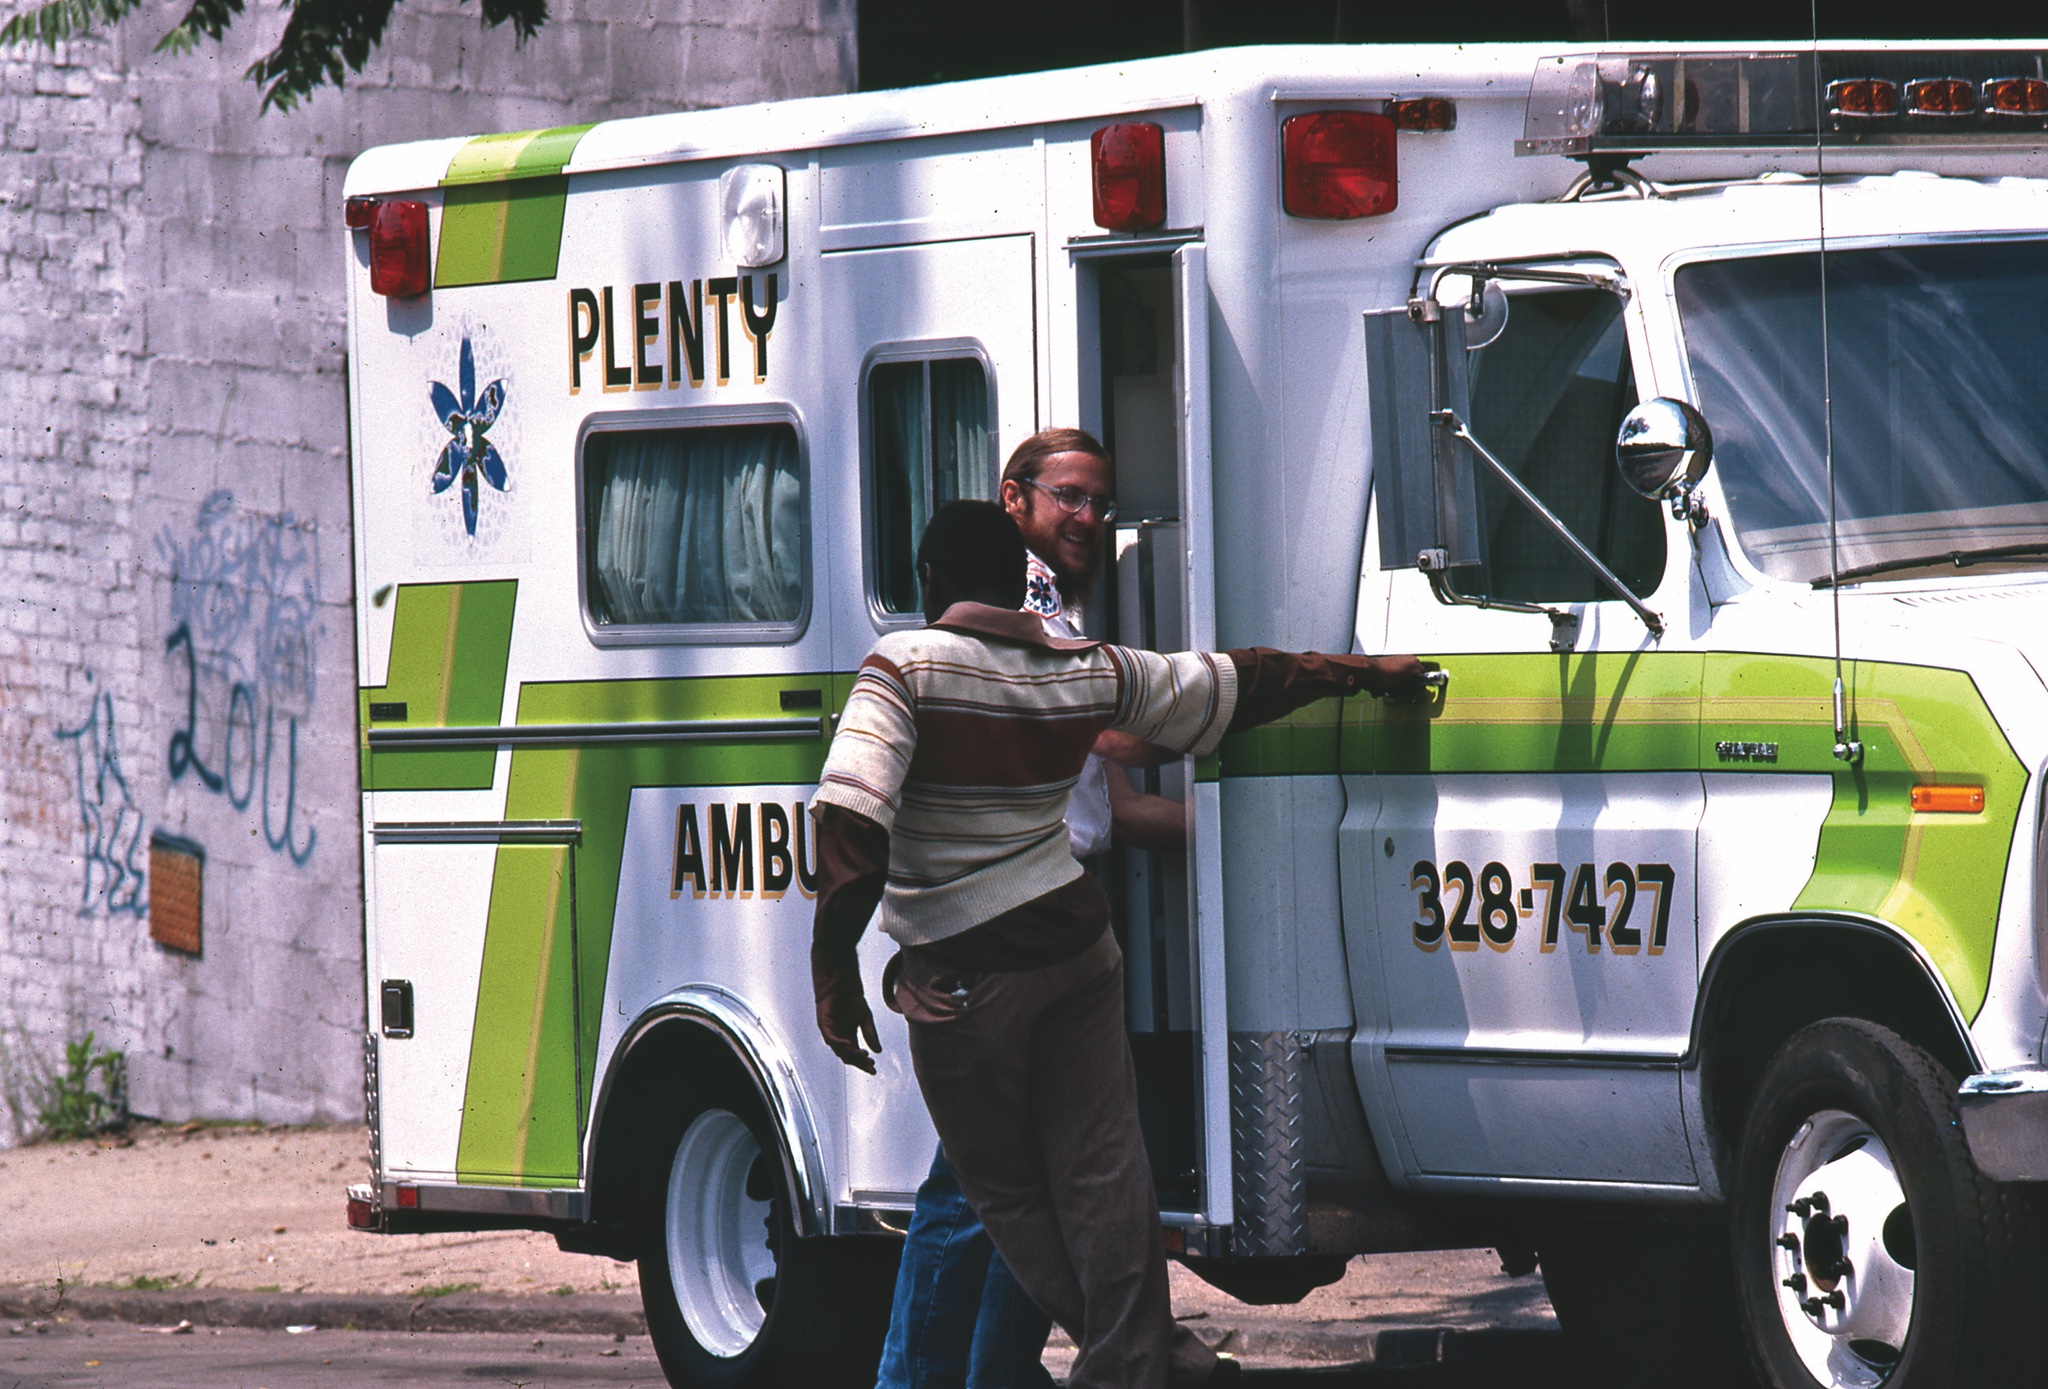 Ben Housel, David Frohman, 1981, Bronx, Plenty Ambulance Service